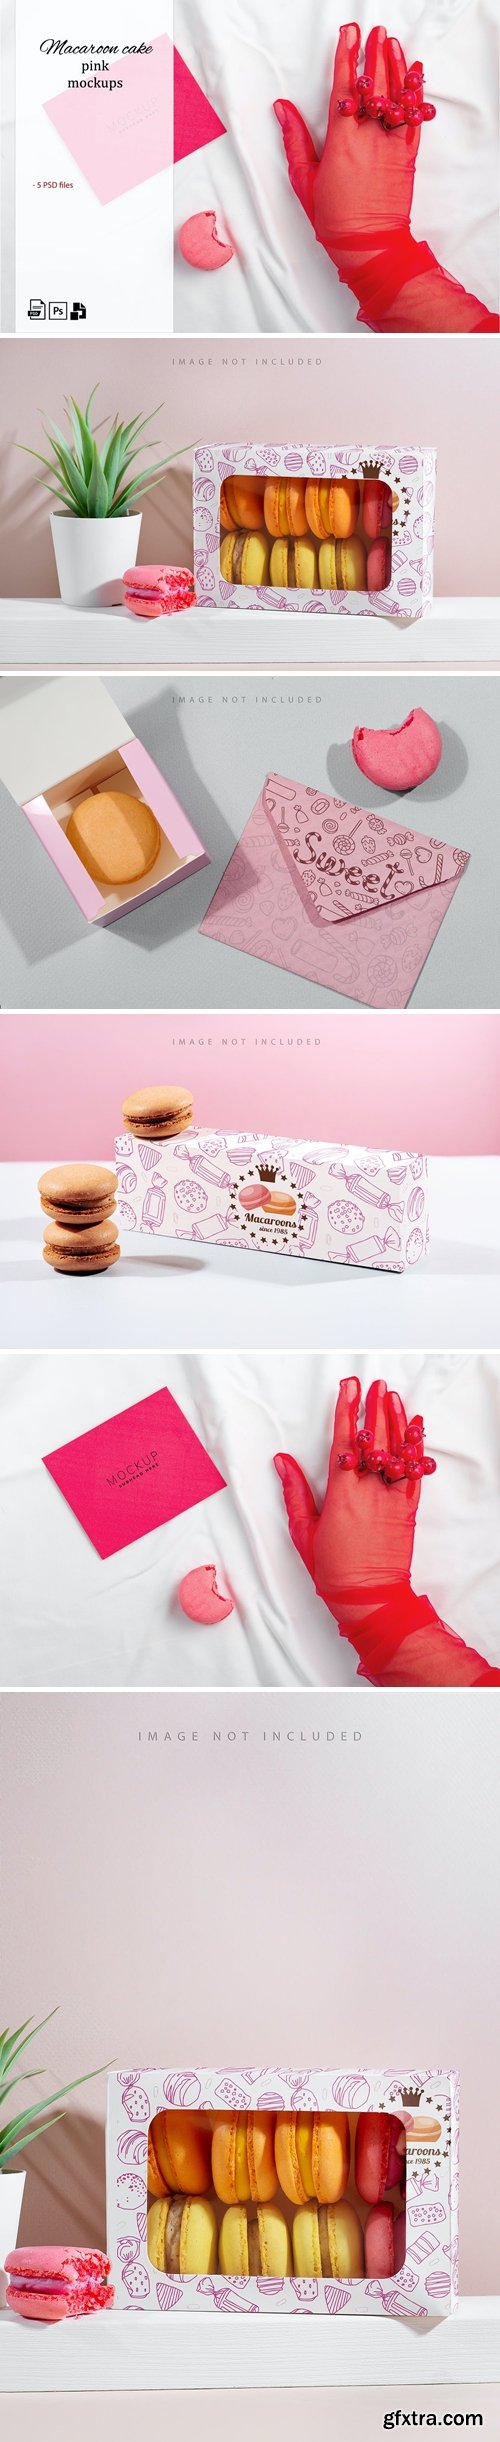 French Macarons pink mockup